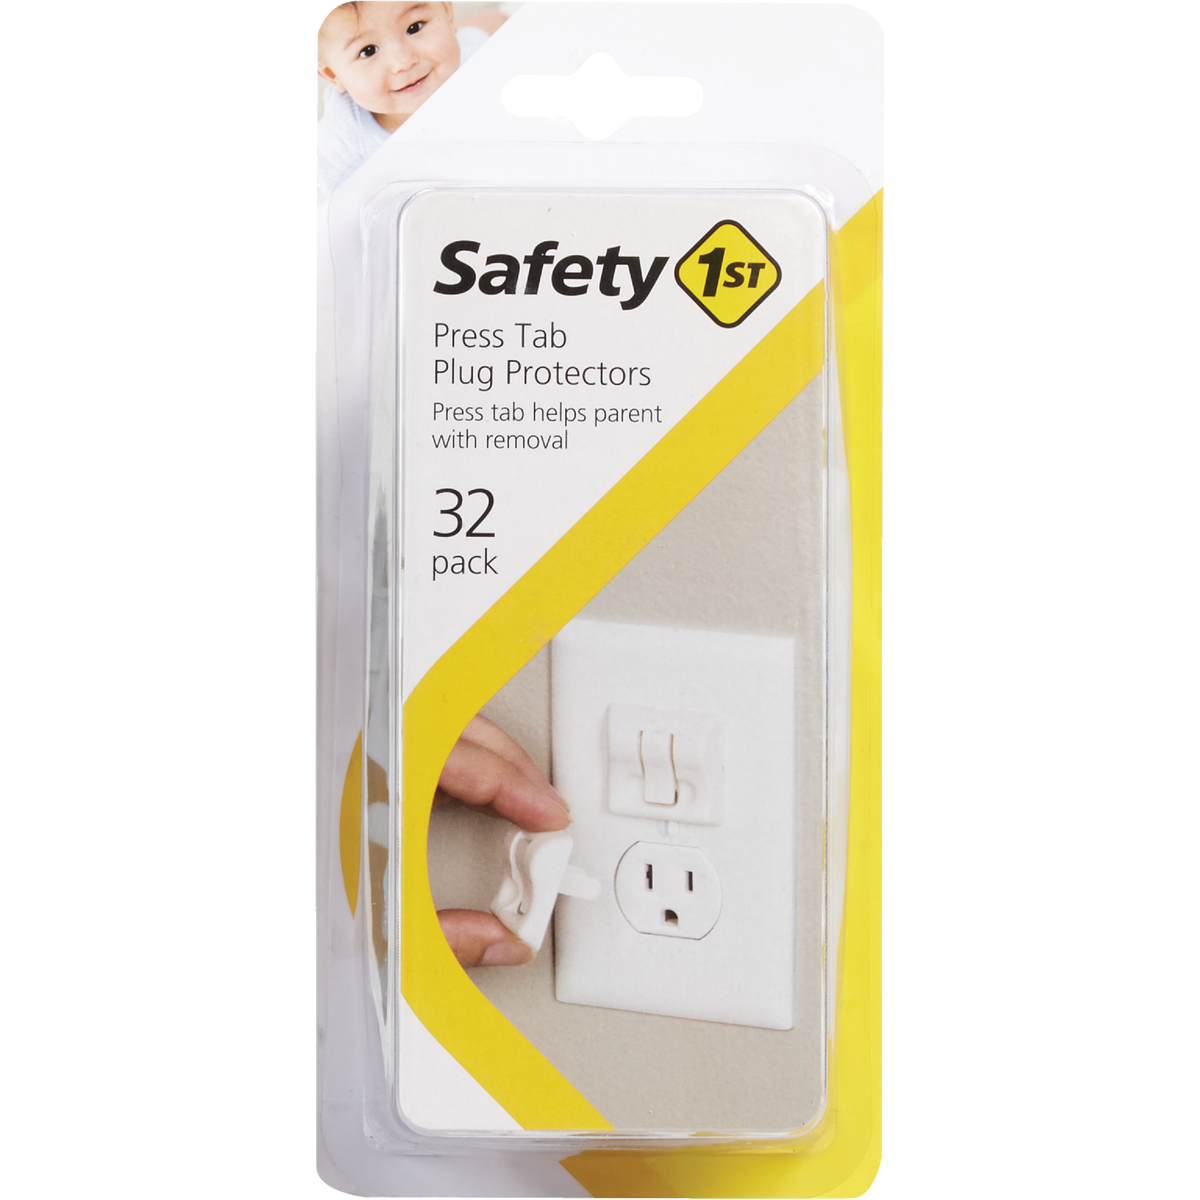 Safety Outlet Plug